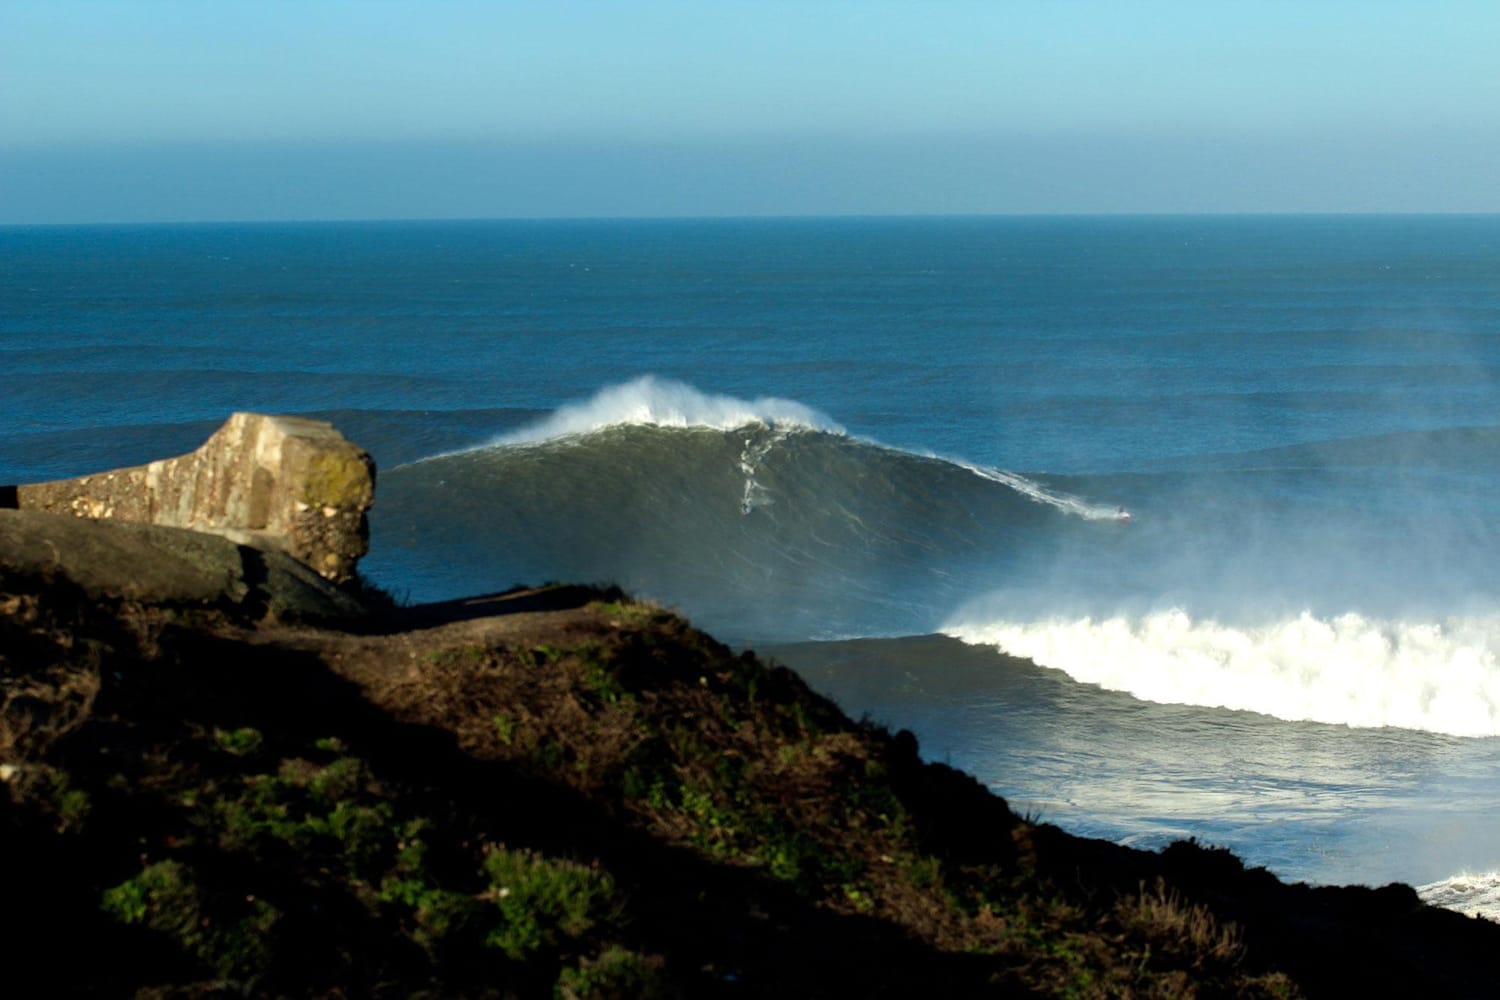 Mick Corbett: Big wave surfing in Nazare, Portugal